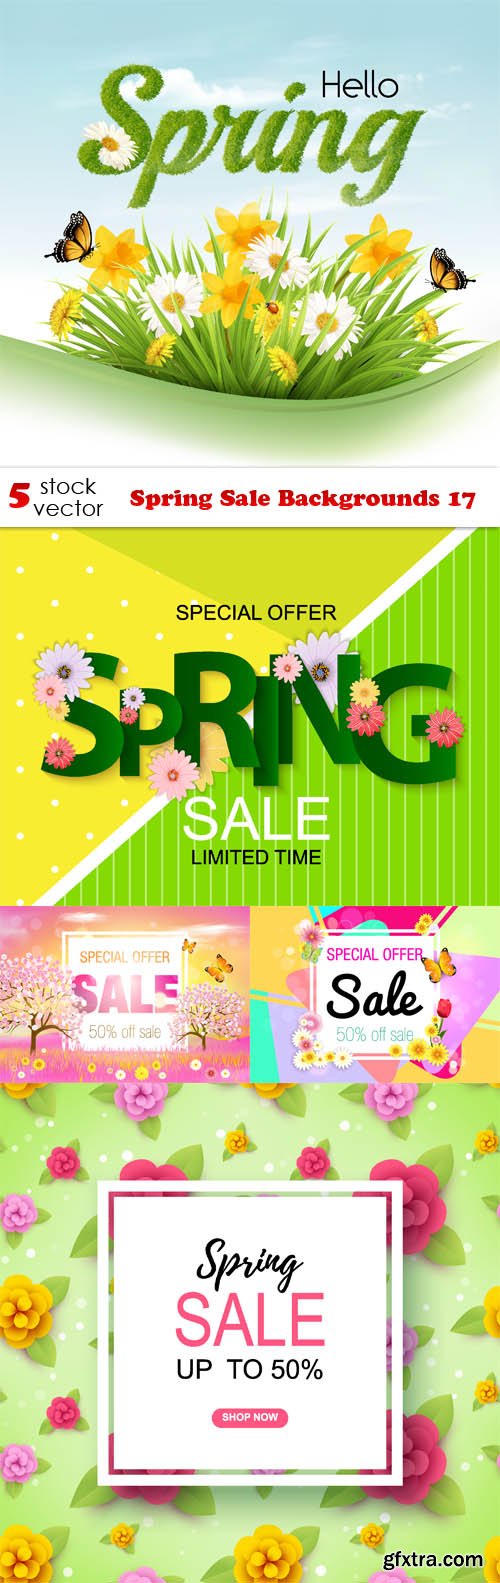 Vectors - Spring Sale Backgrounds 17